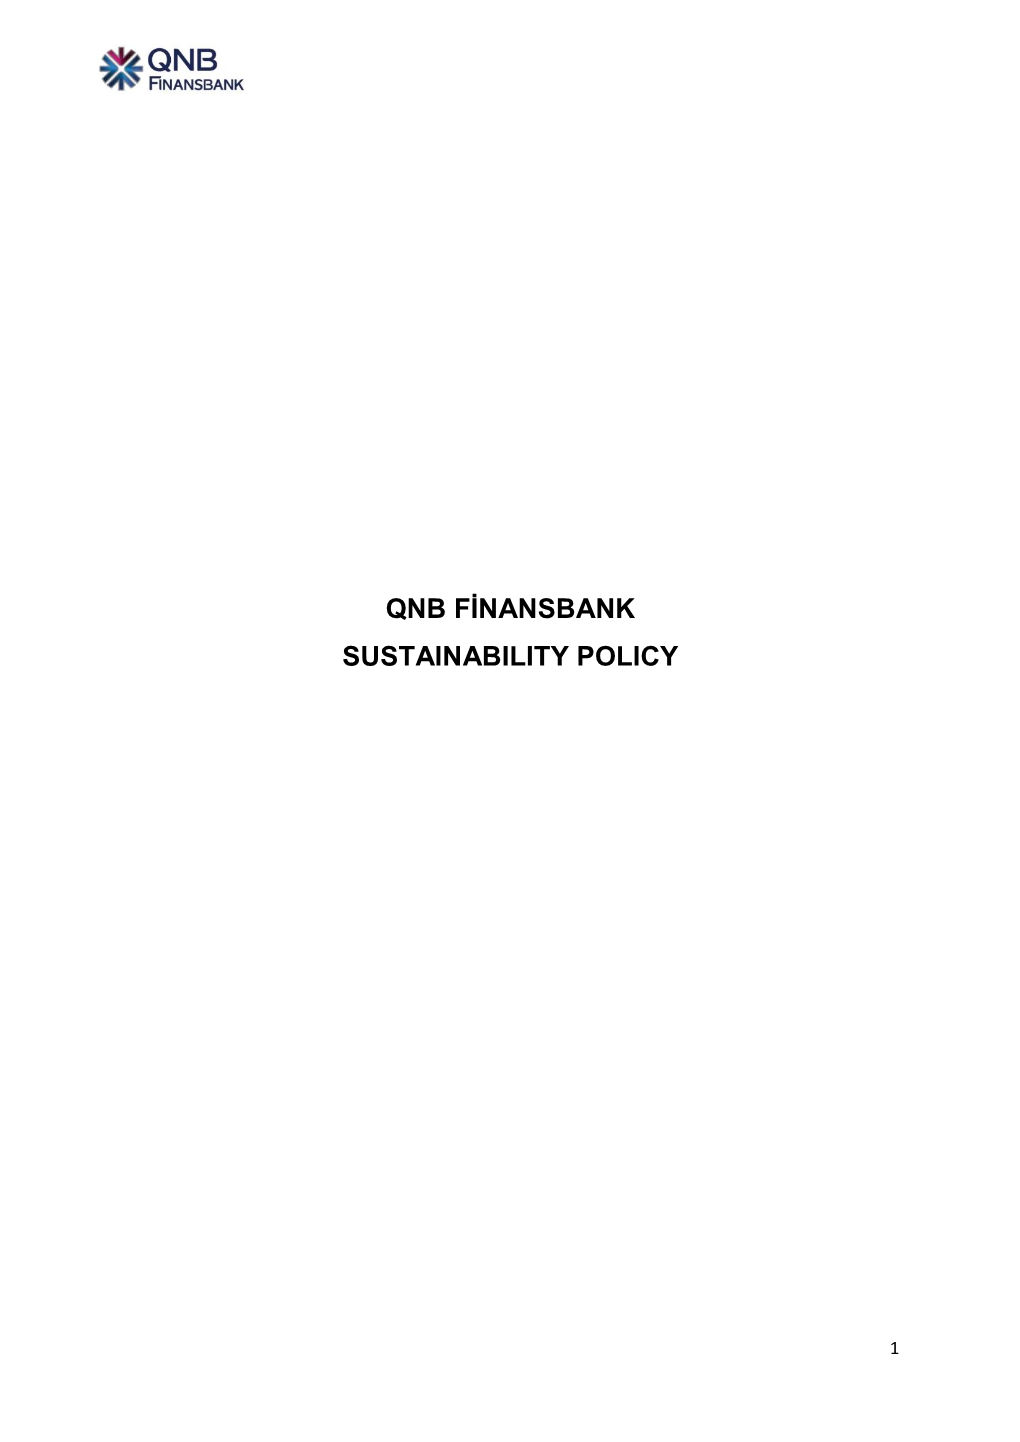 Qnb Finansbank Sustainability Policy